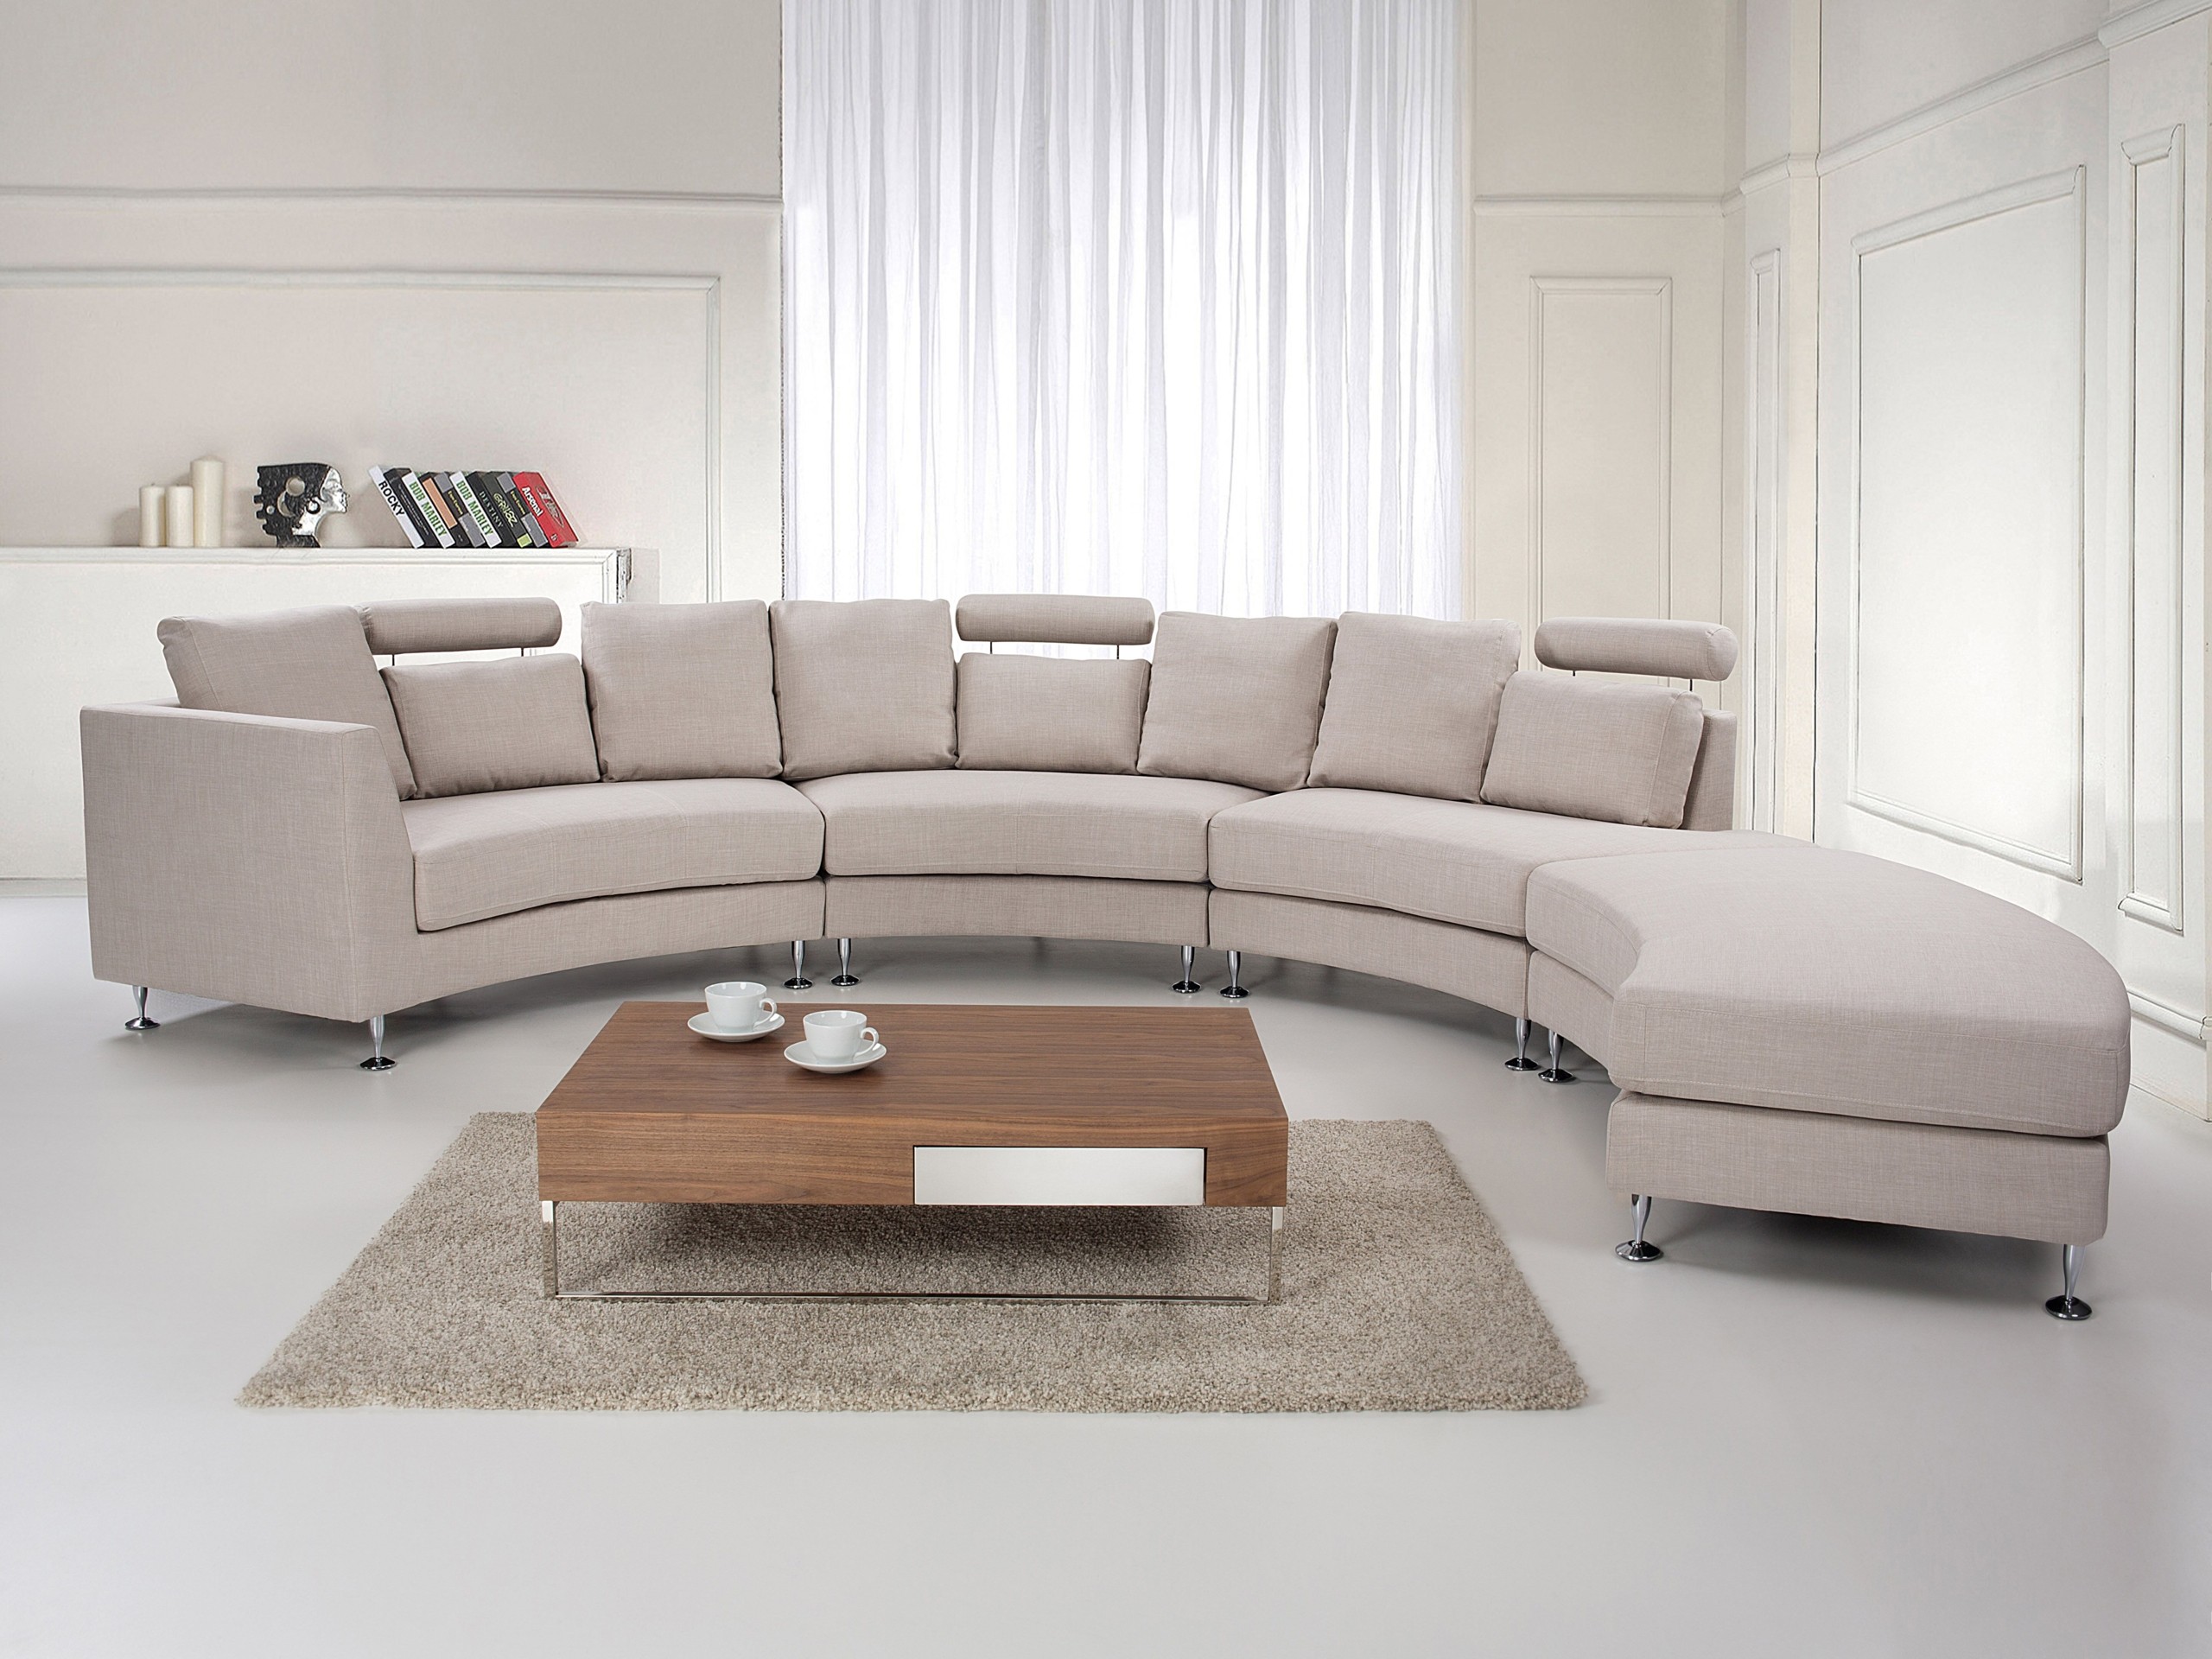 Round Upholstered Sofa - Sectional - Beige Fabric - ROTUNDE